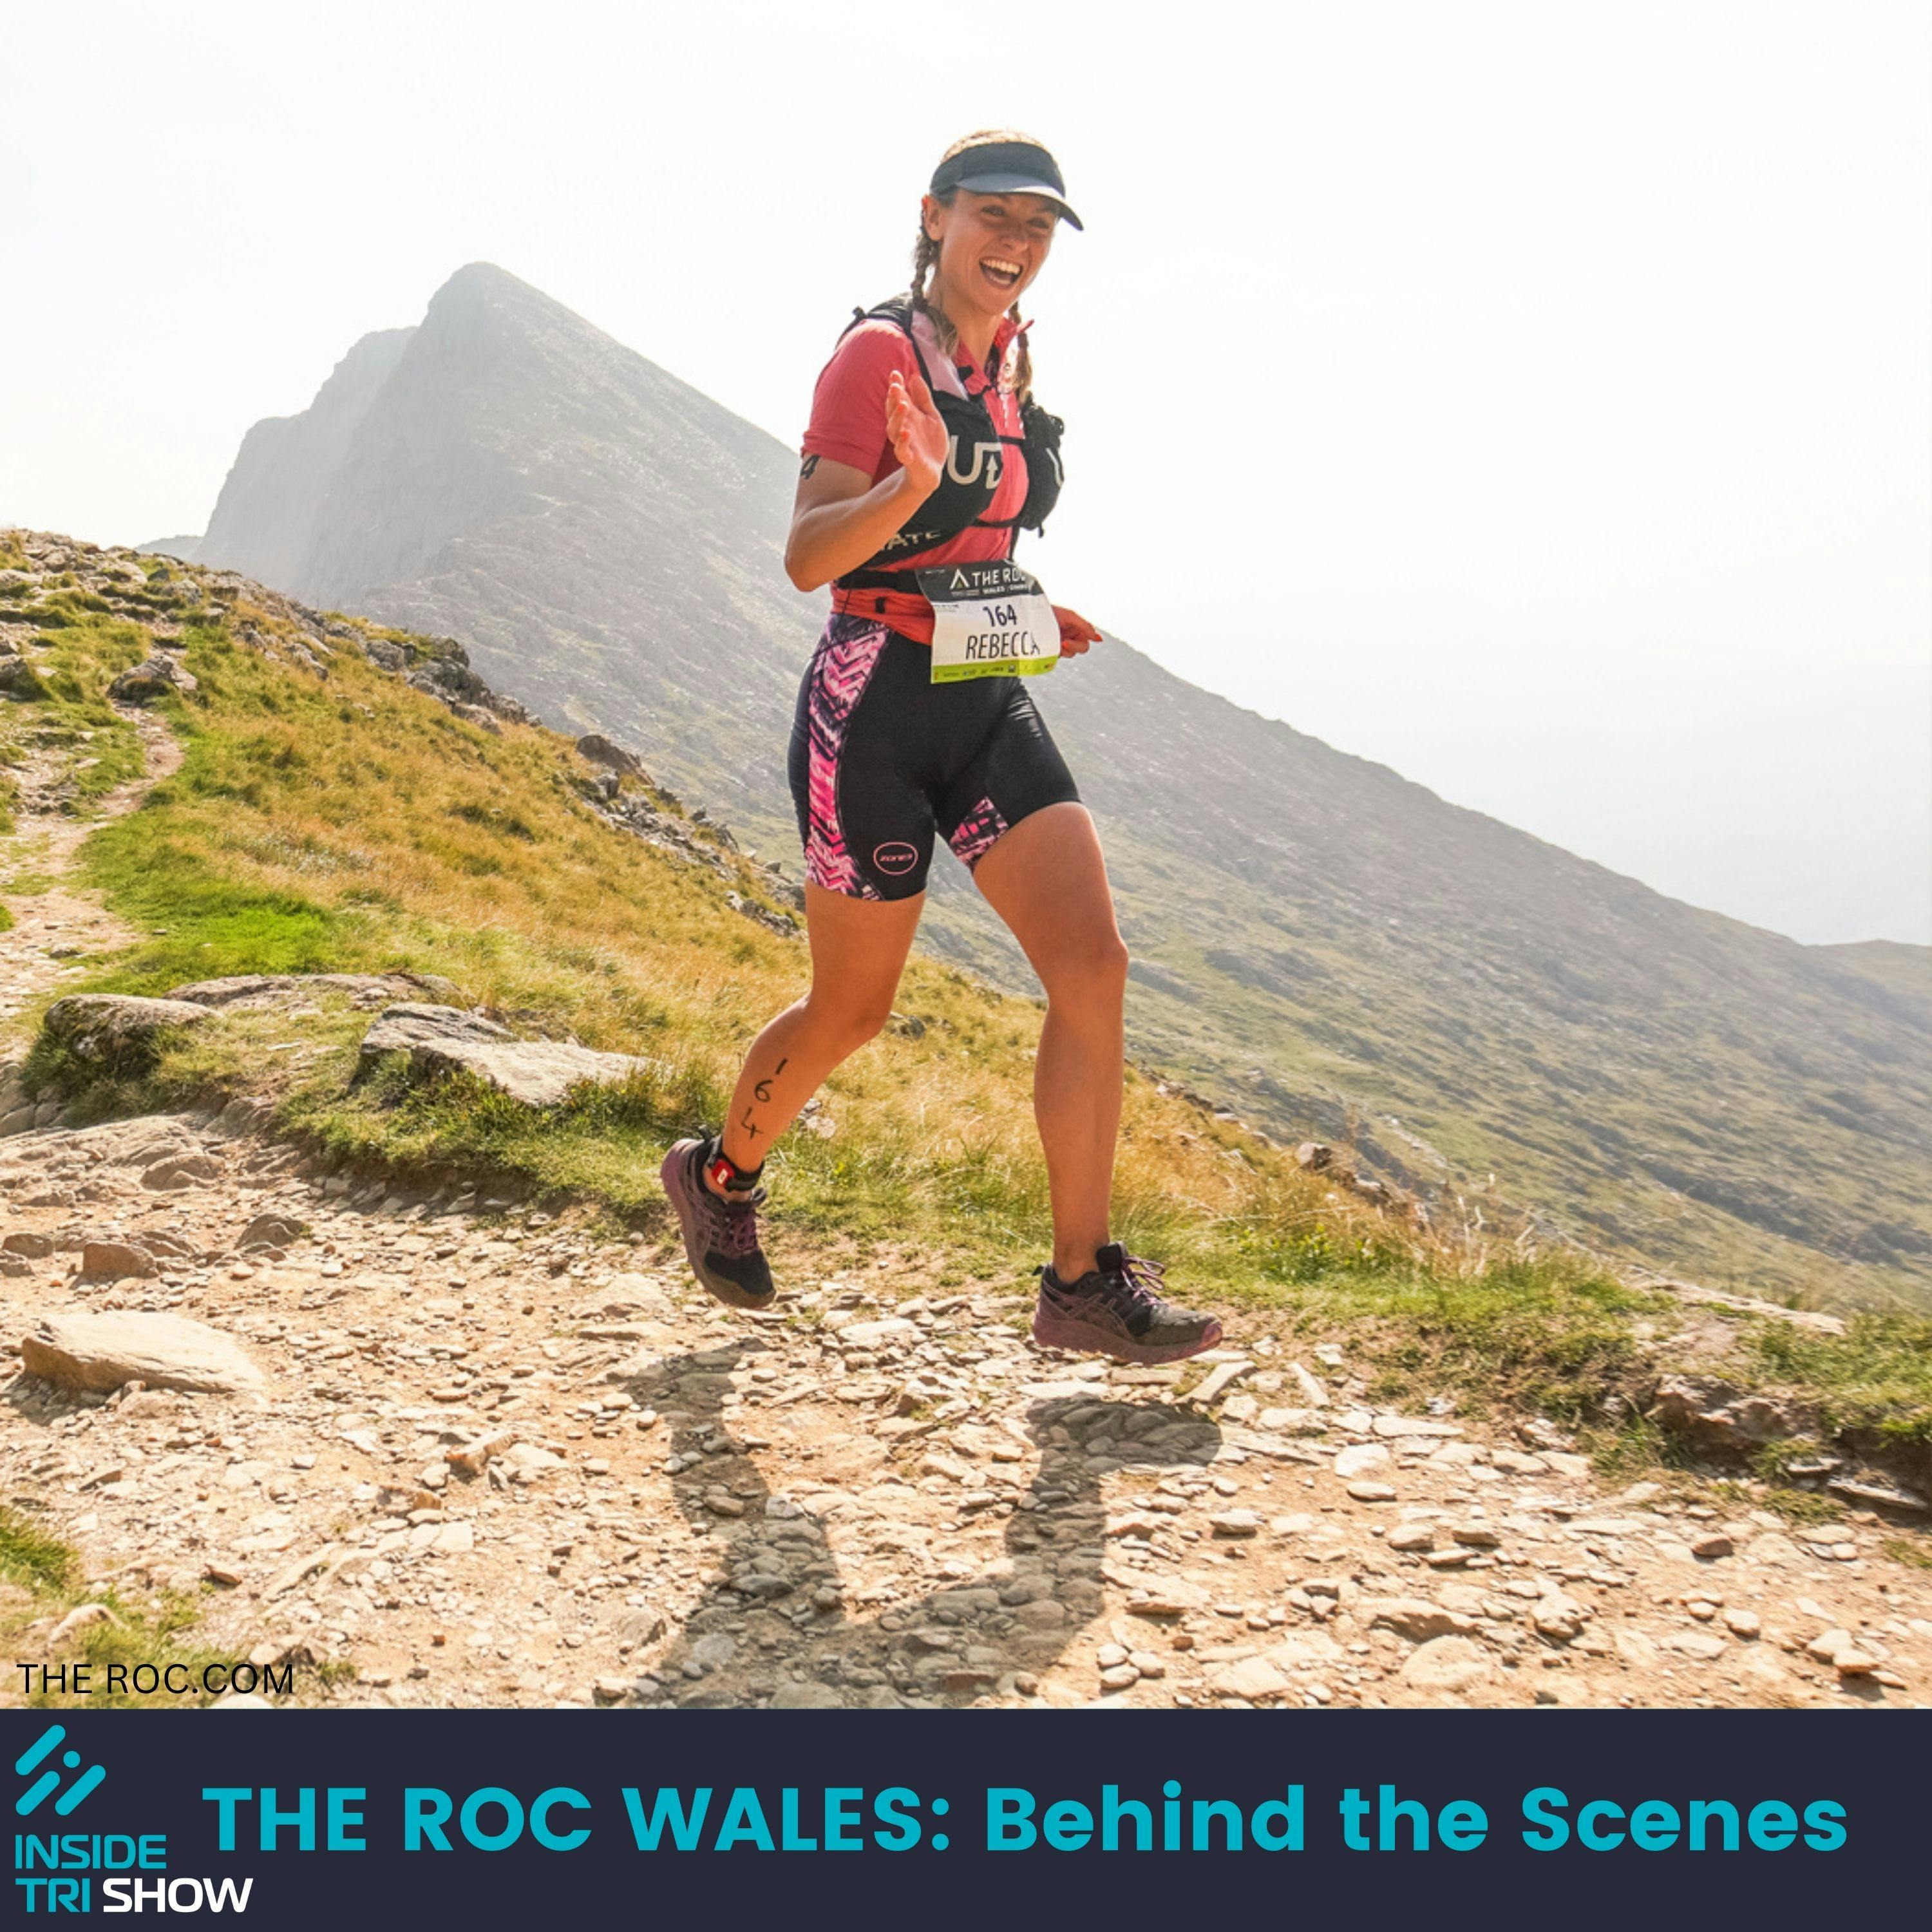 THE ROC Wales Triathlon: Behind the Scenes